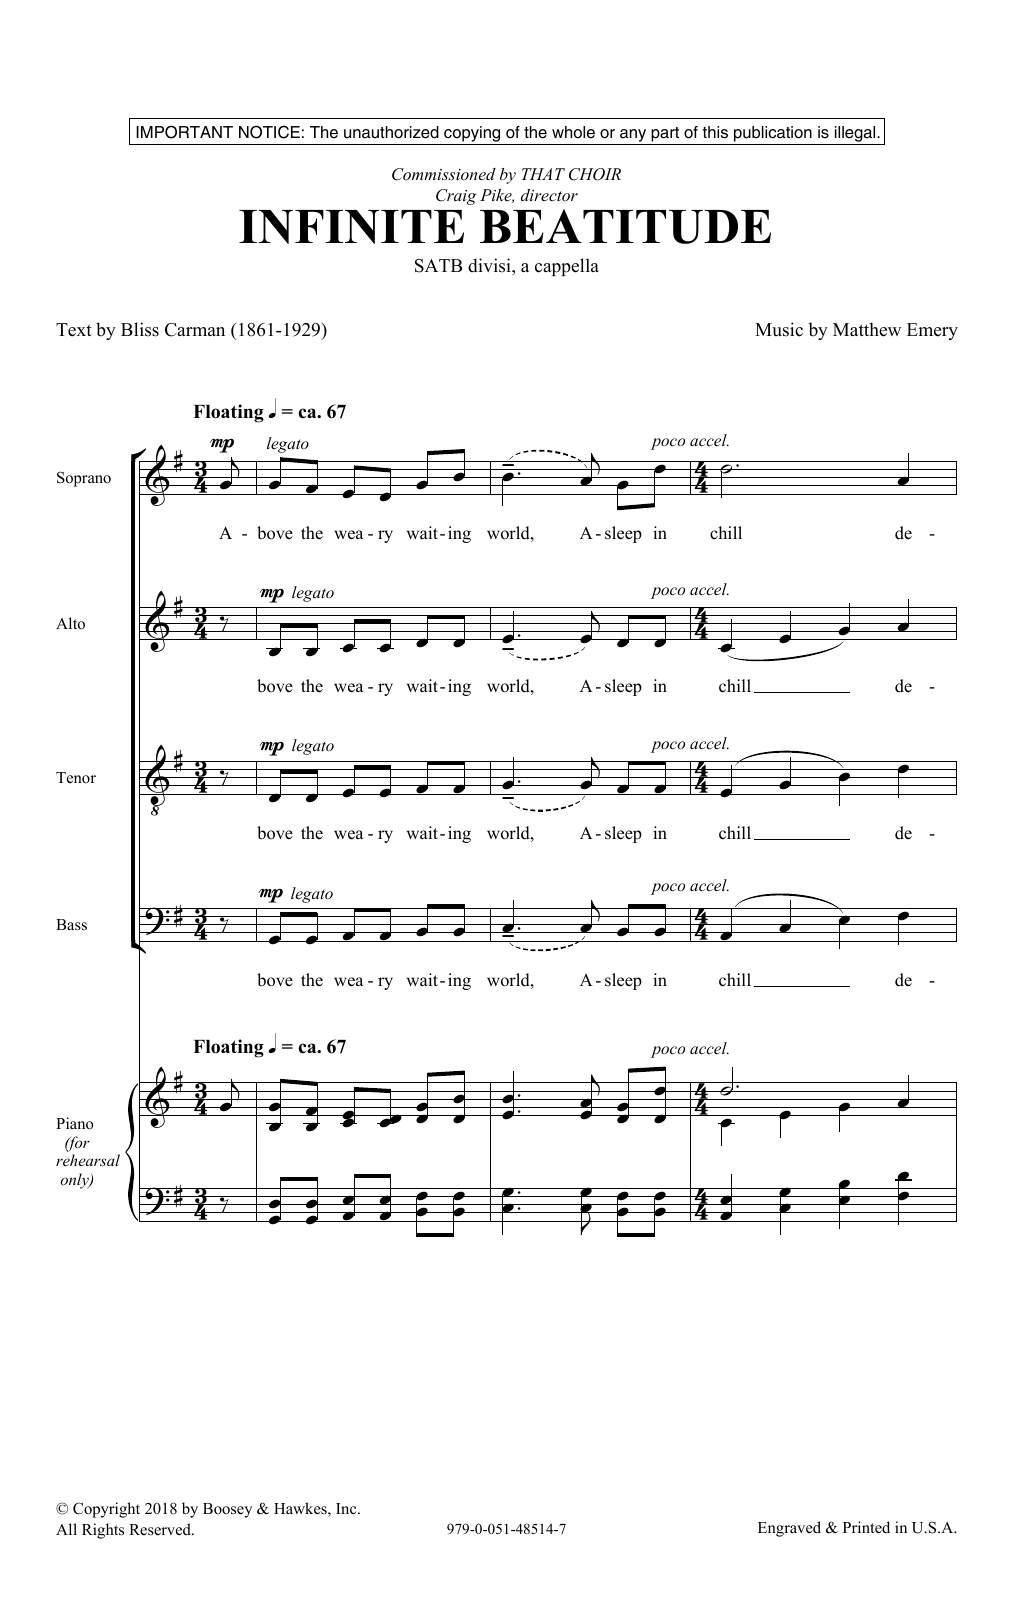 Matthew Emery & Bliss Carman Infinite Beatitude Sheet Music Notes & Chords for SATB Choir - Download or Print PDF